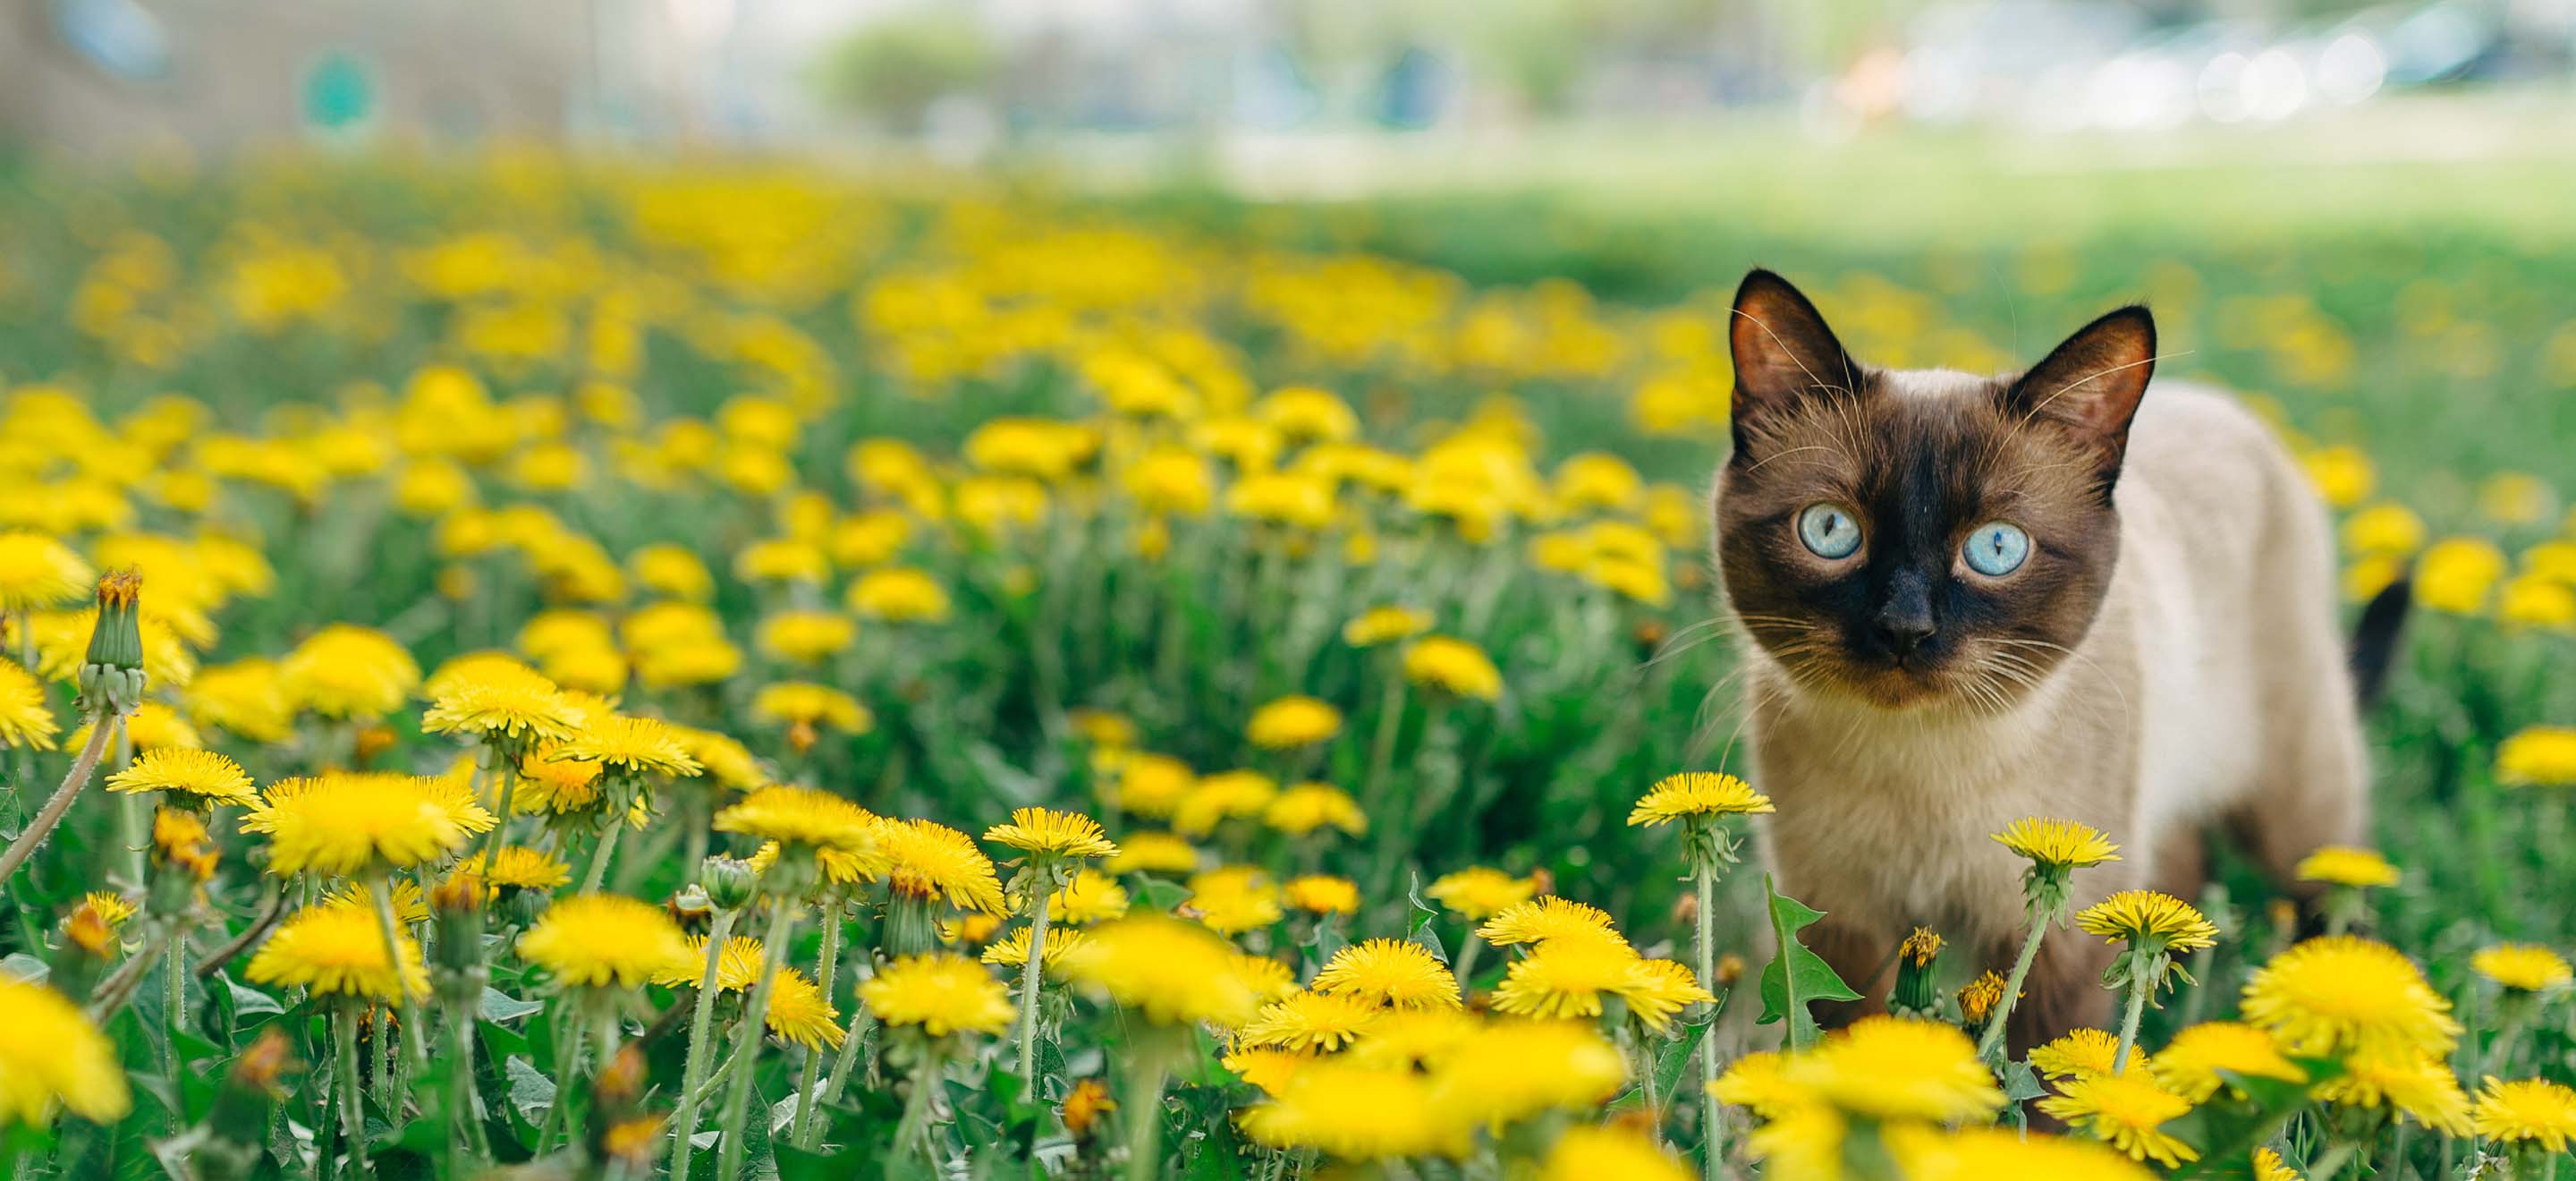 Siamese cat standing in a field of dandelion flowers image